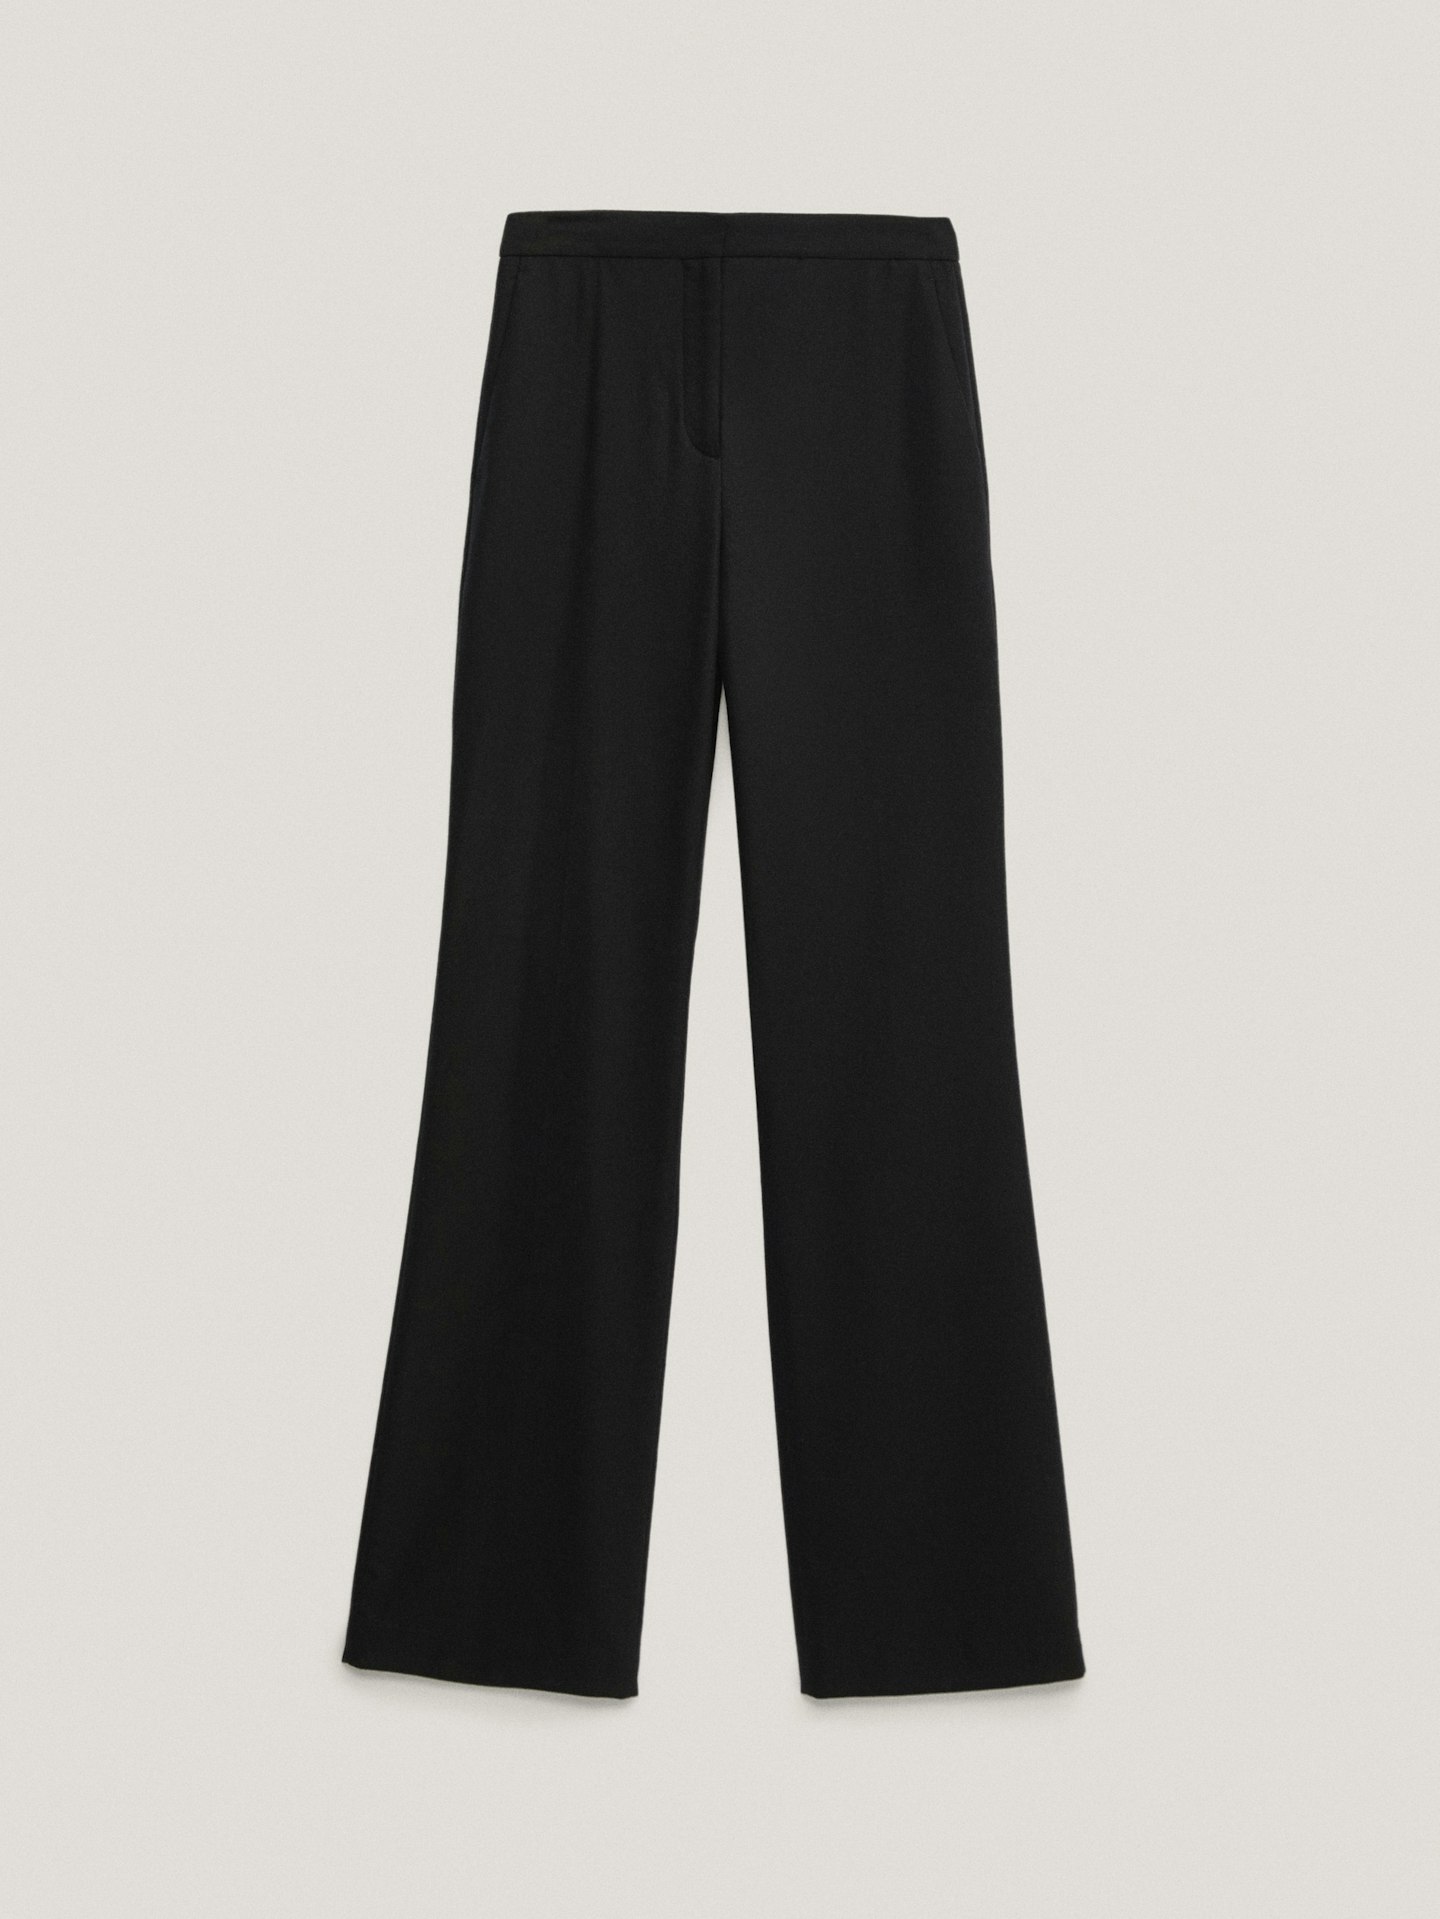 Massimo Dutti, Flared Black Wool Trousers, £99.95